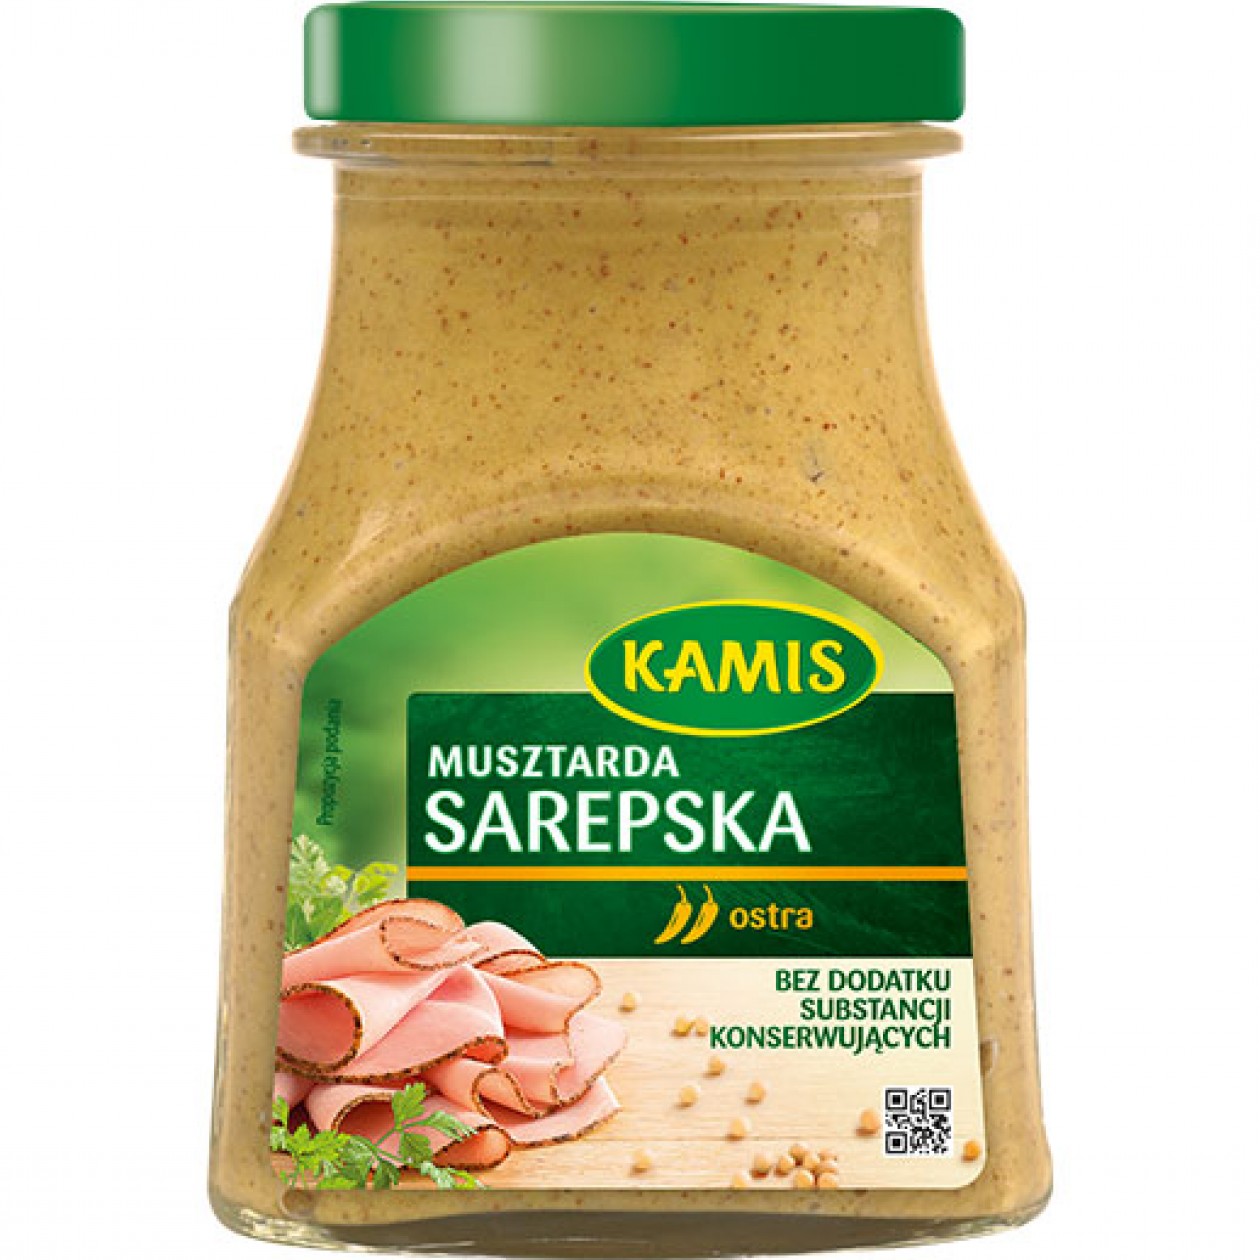 Kamis Mustard Classic (Sarepska) 8x185g